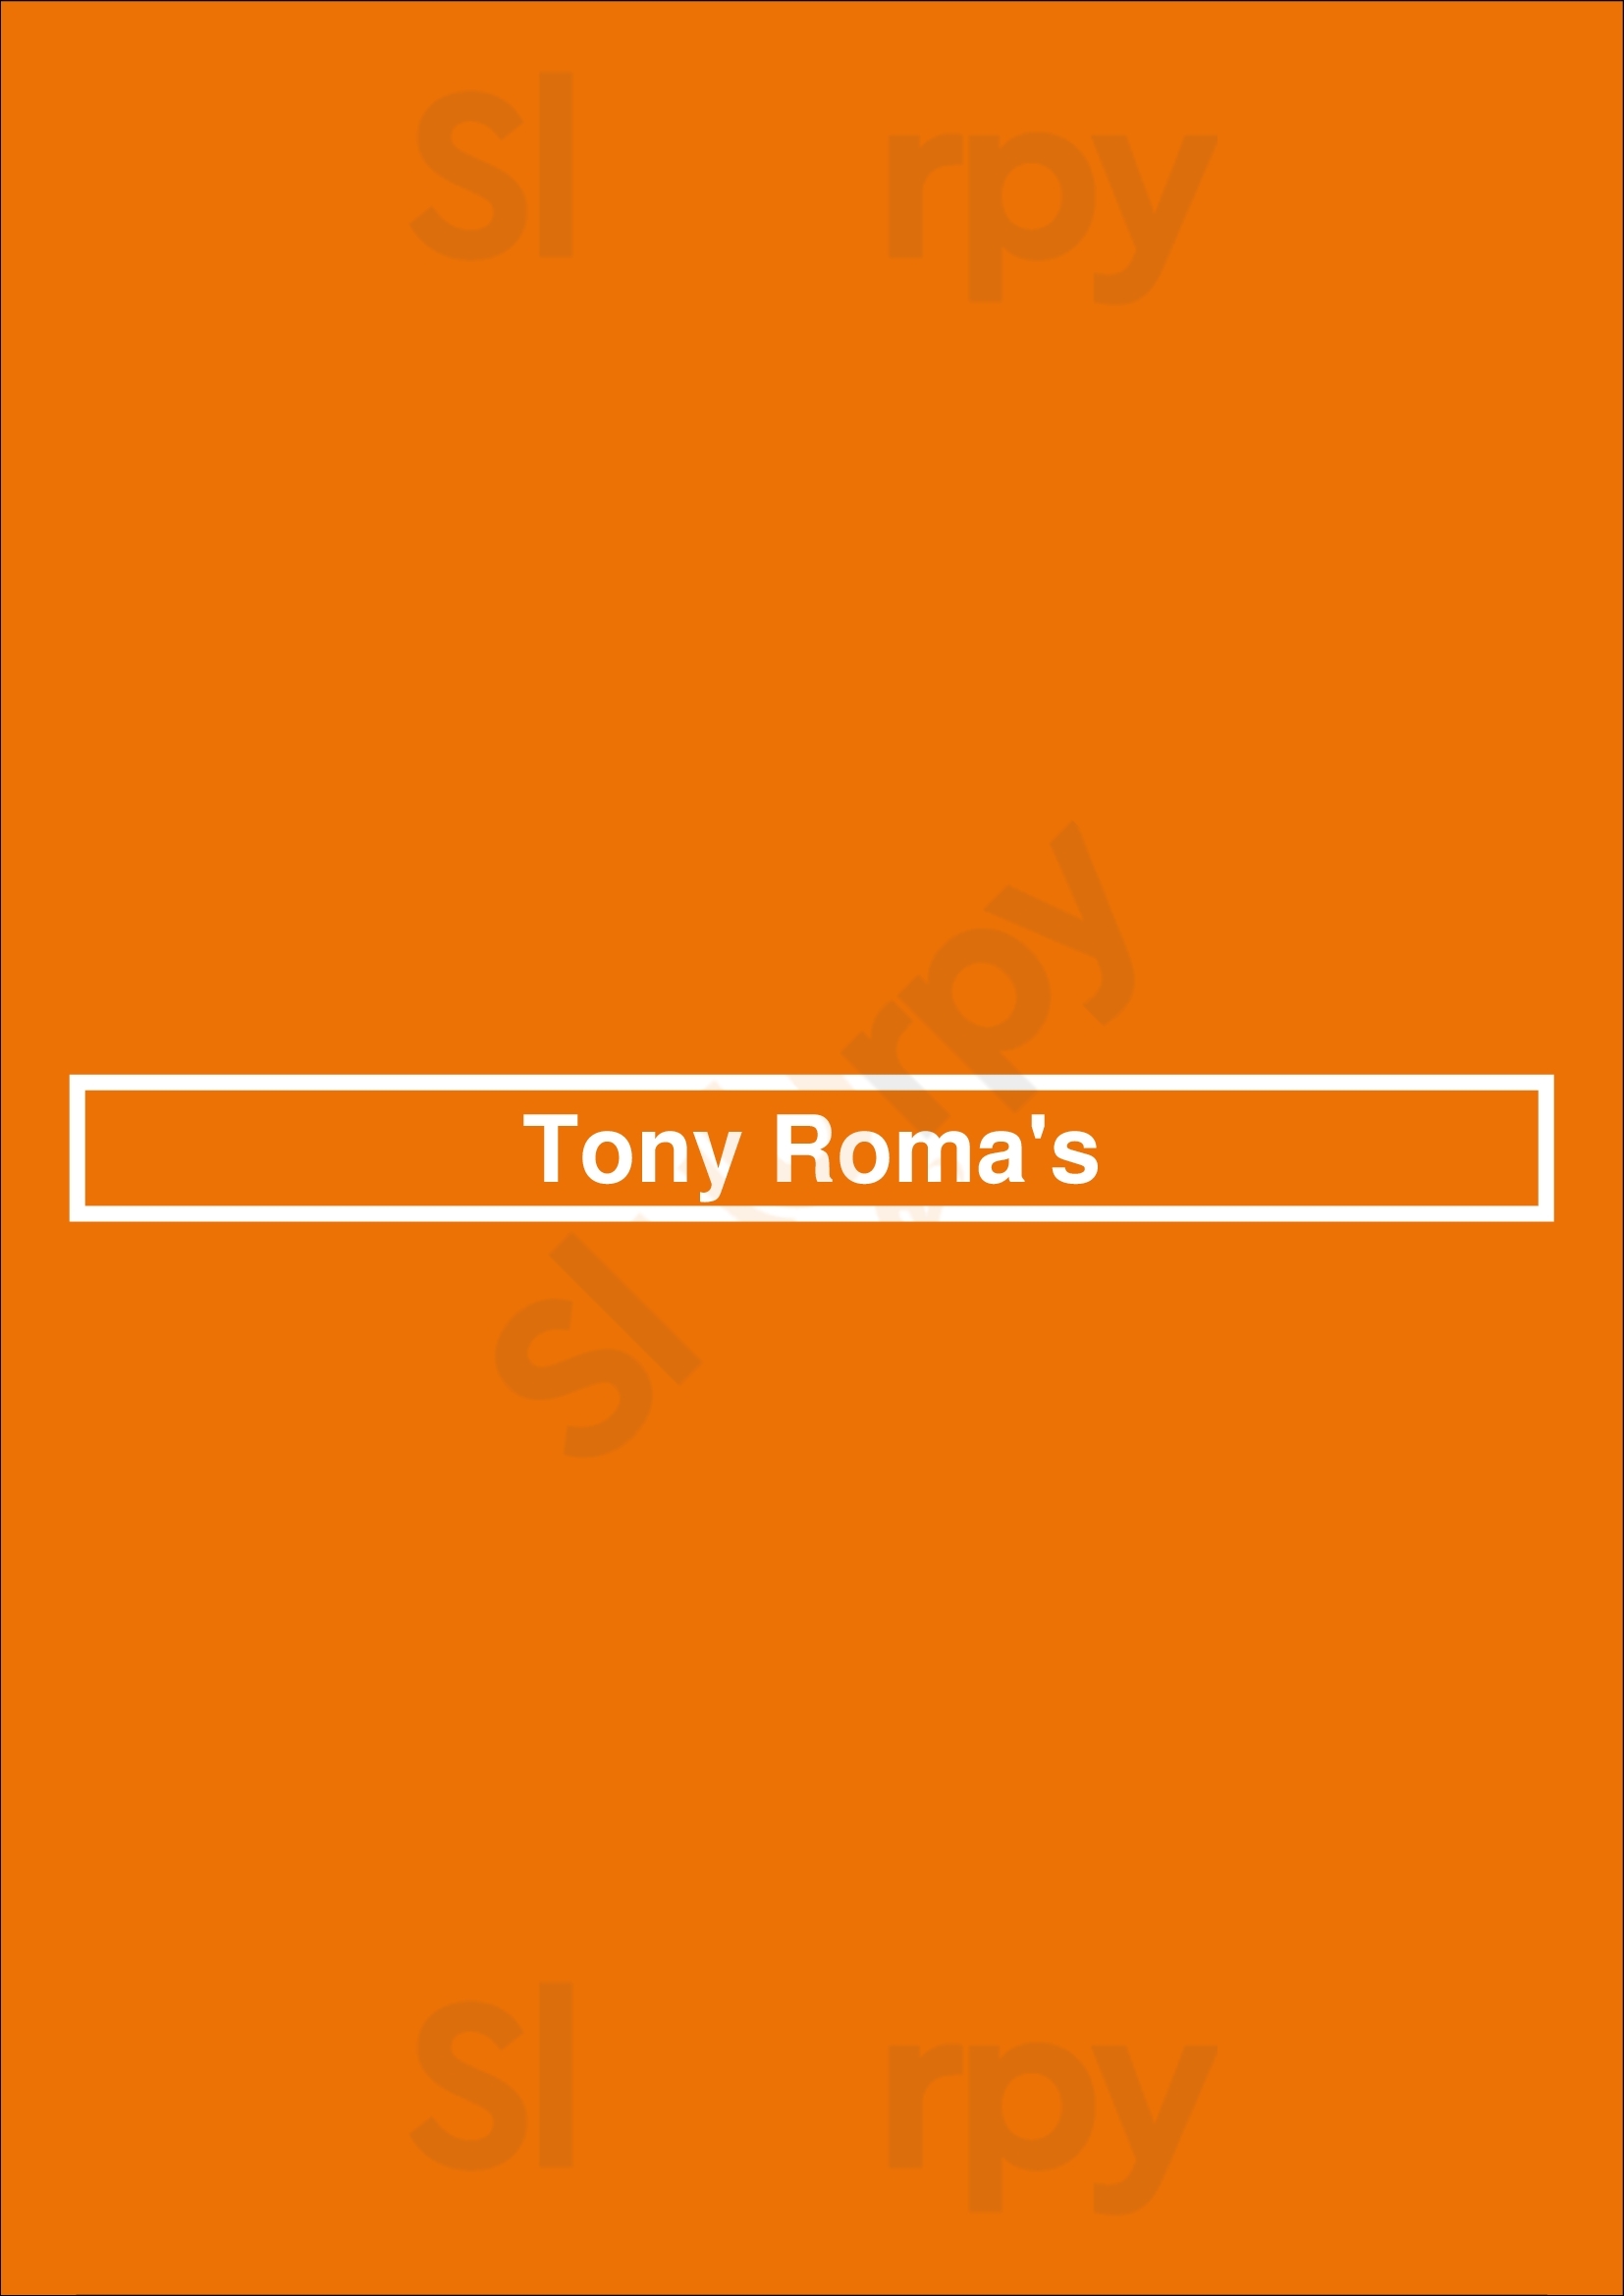 Tony Roma's Winnipeg Menu - 1